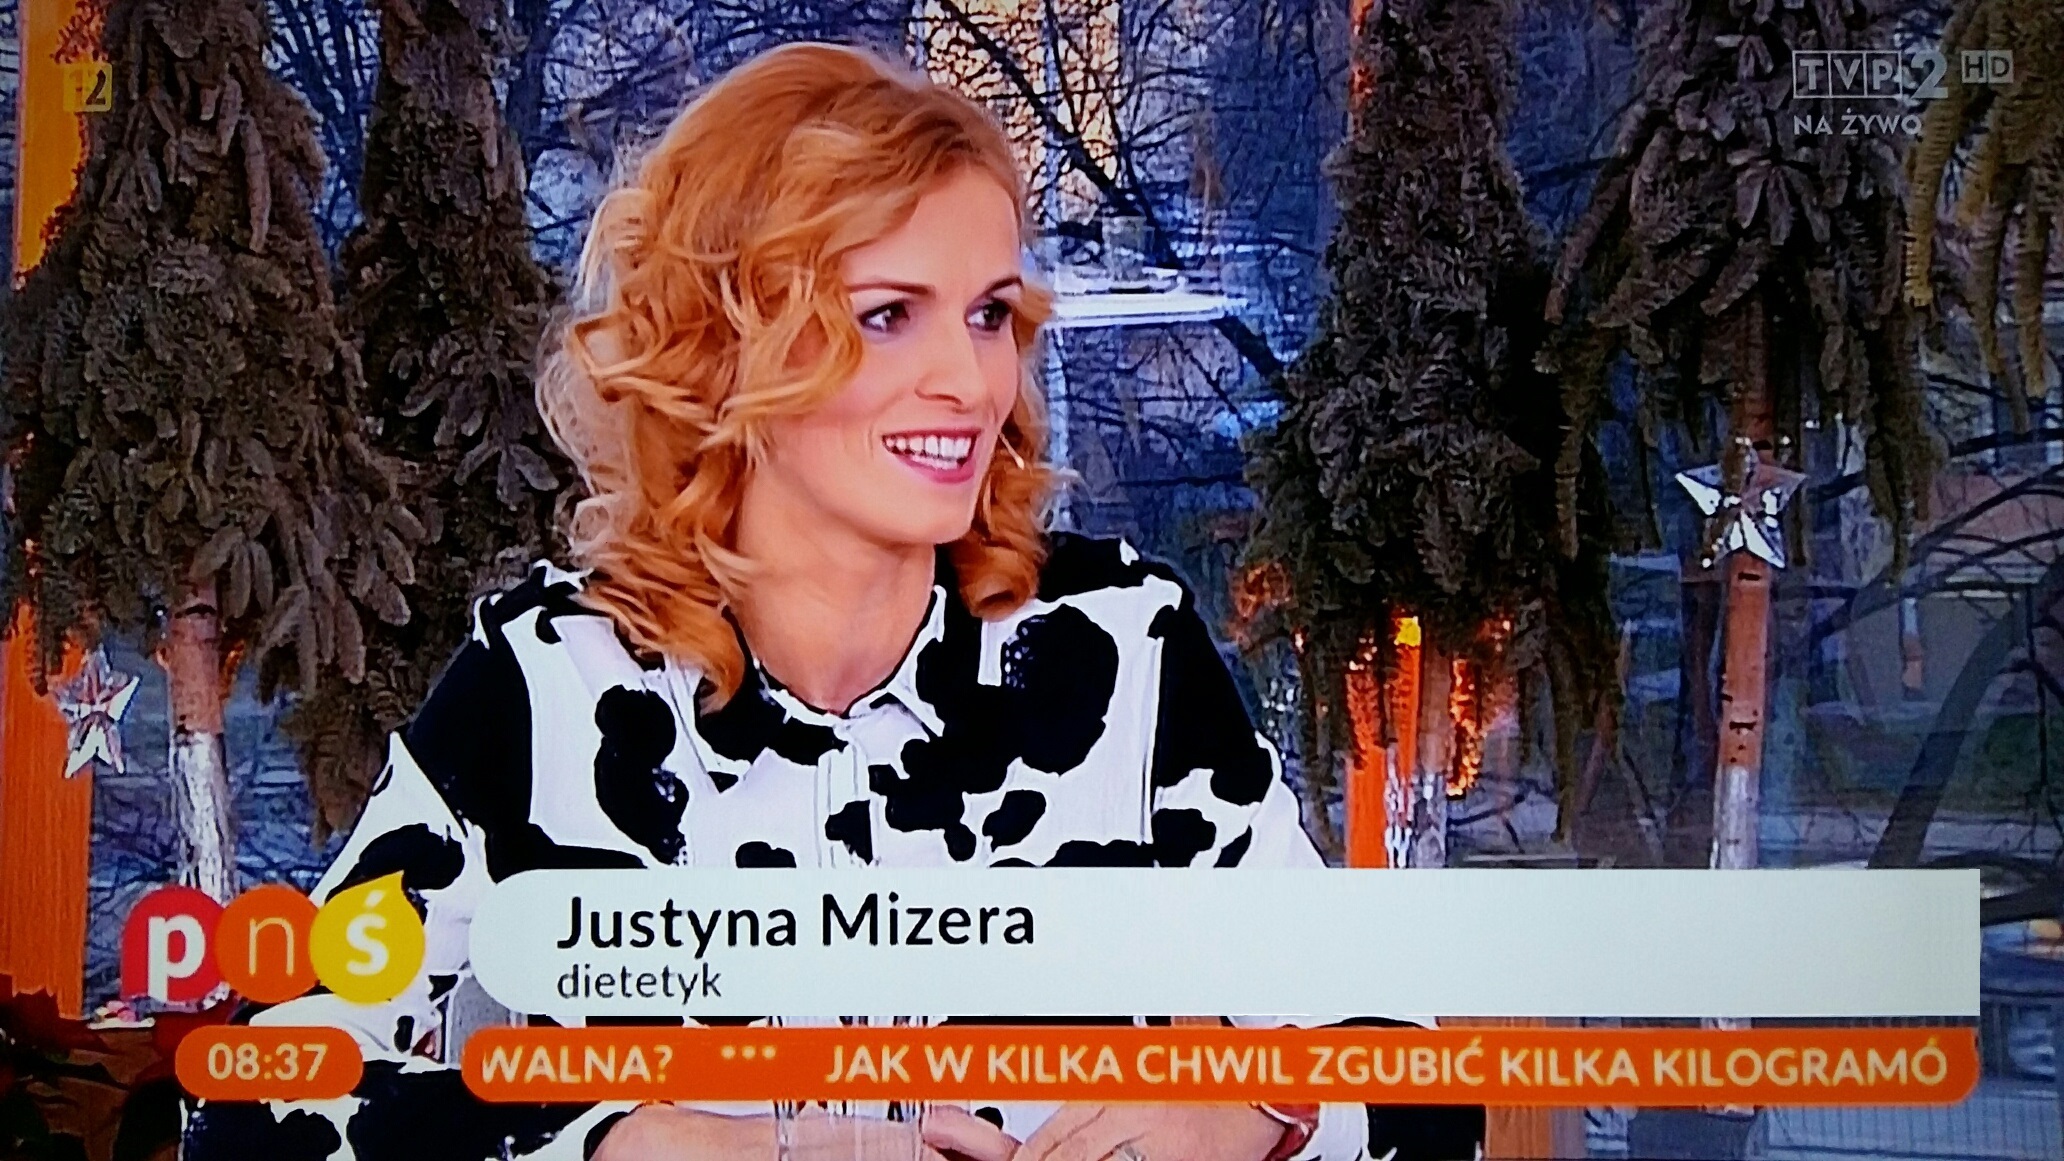 Justyna Mizera dietetyk gwiazd